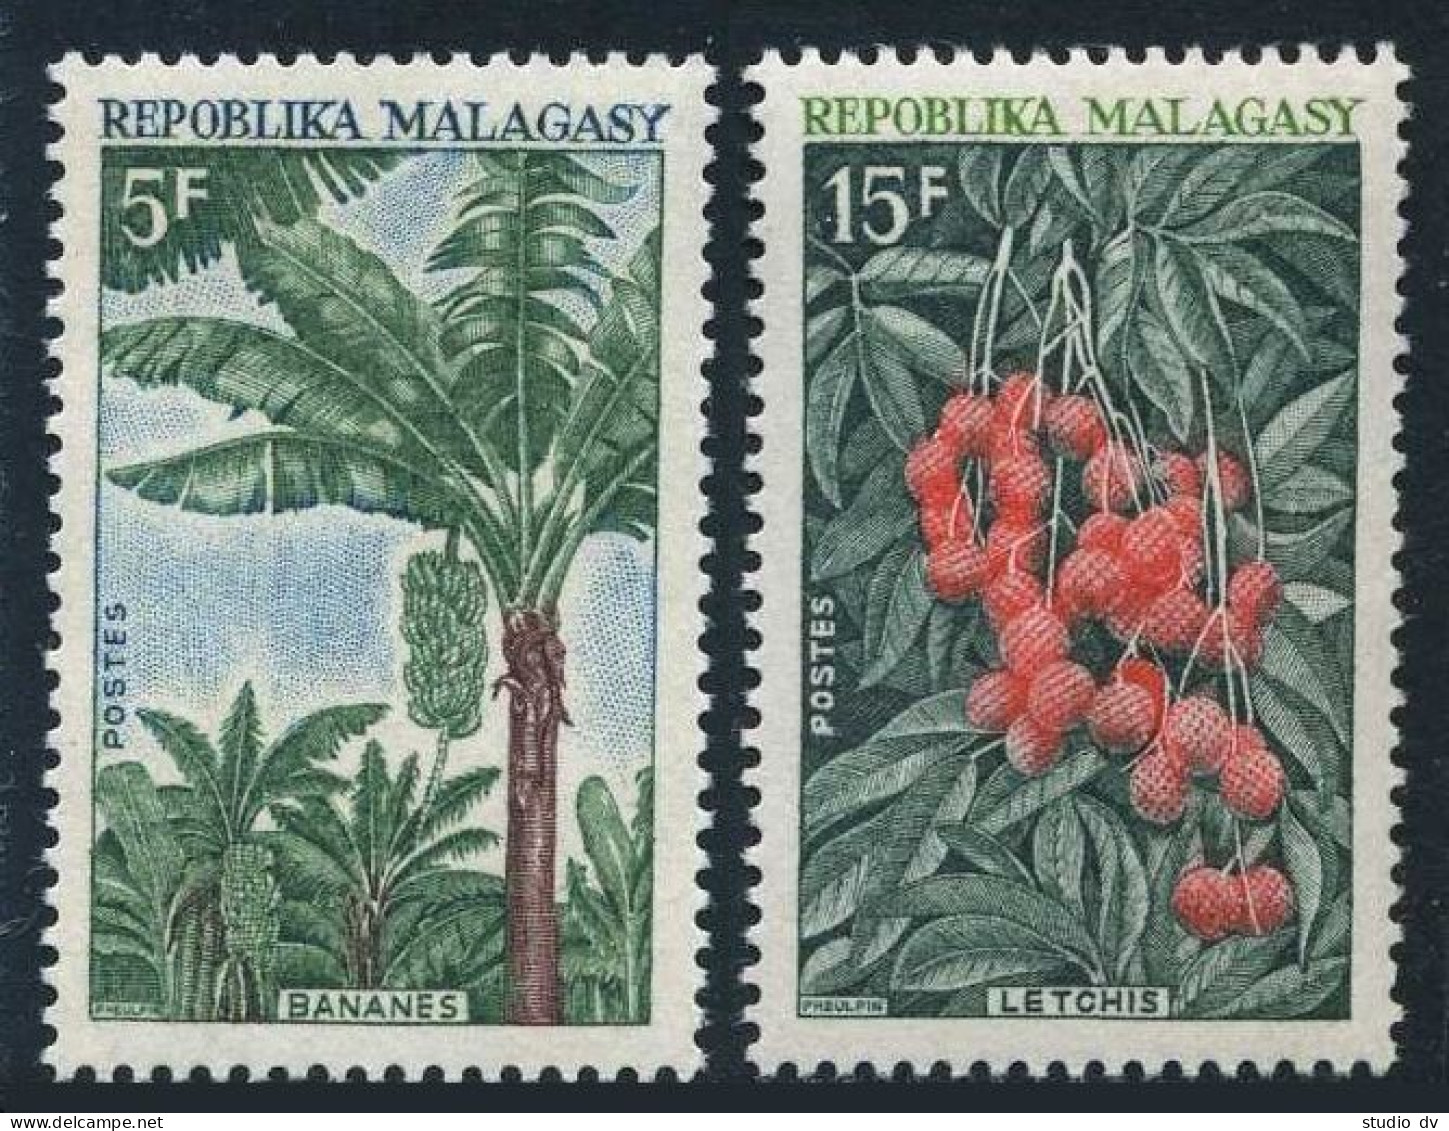 Malagasy 427-428, Hinged. Michel 603-604. Banana Plants, Lichi Tree, 1969. - Madagascar (1960-...)